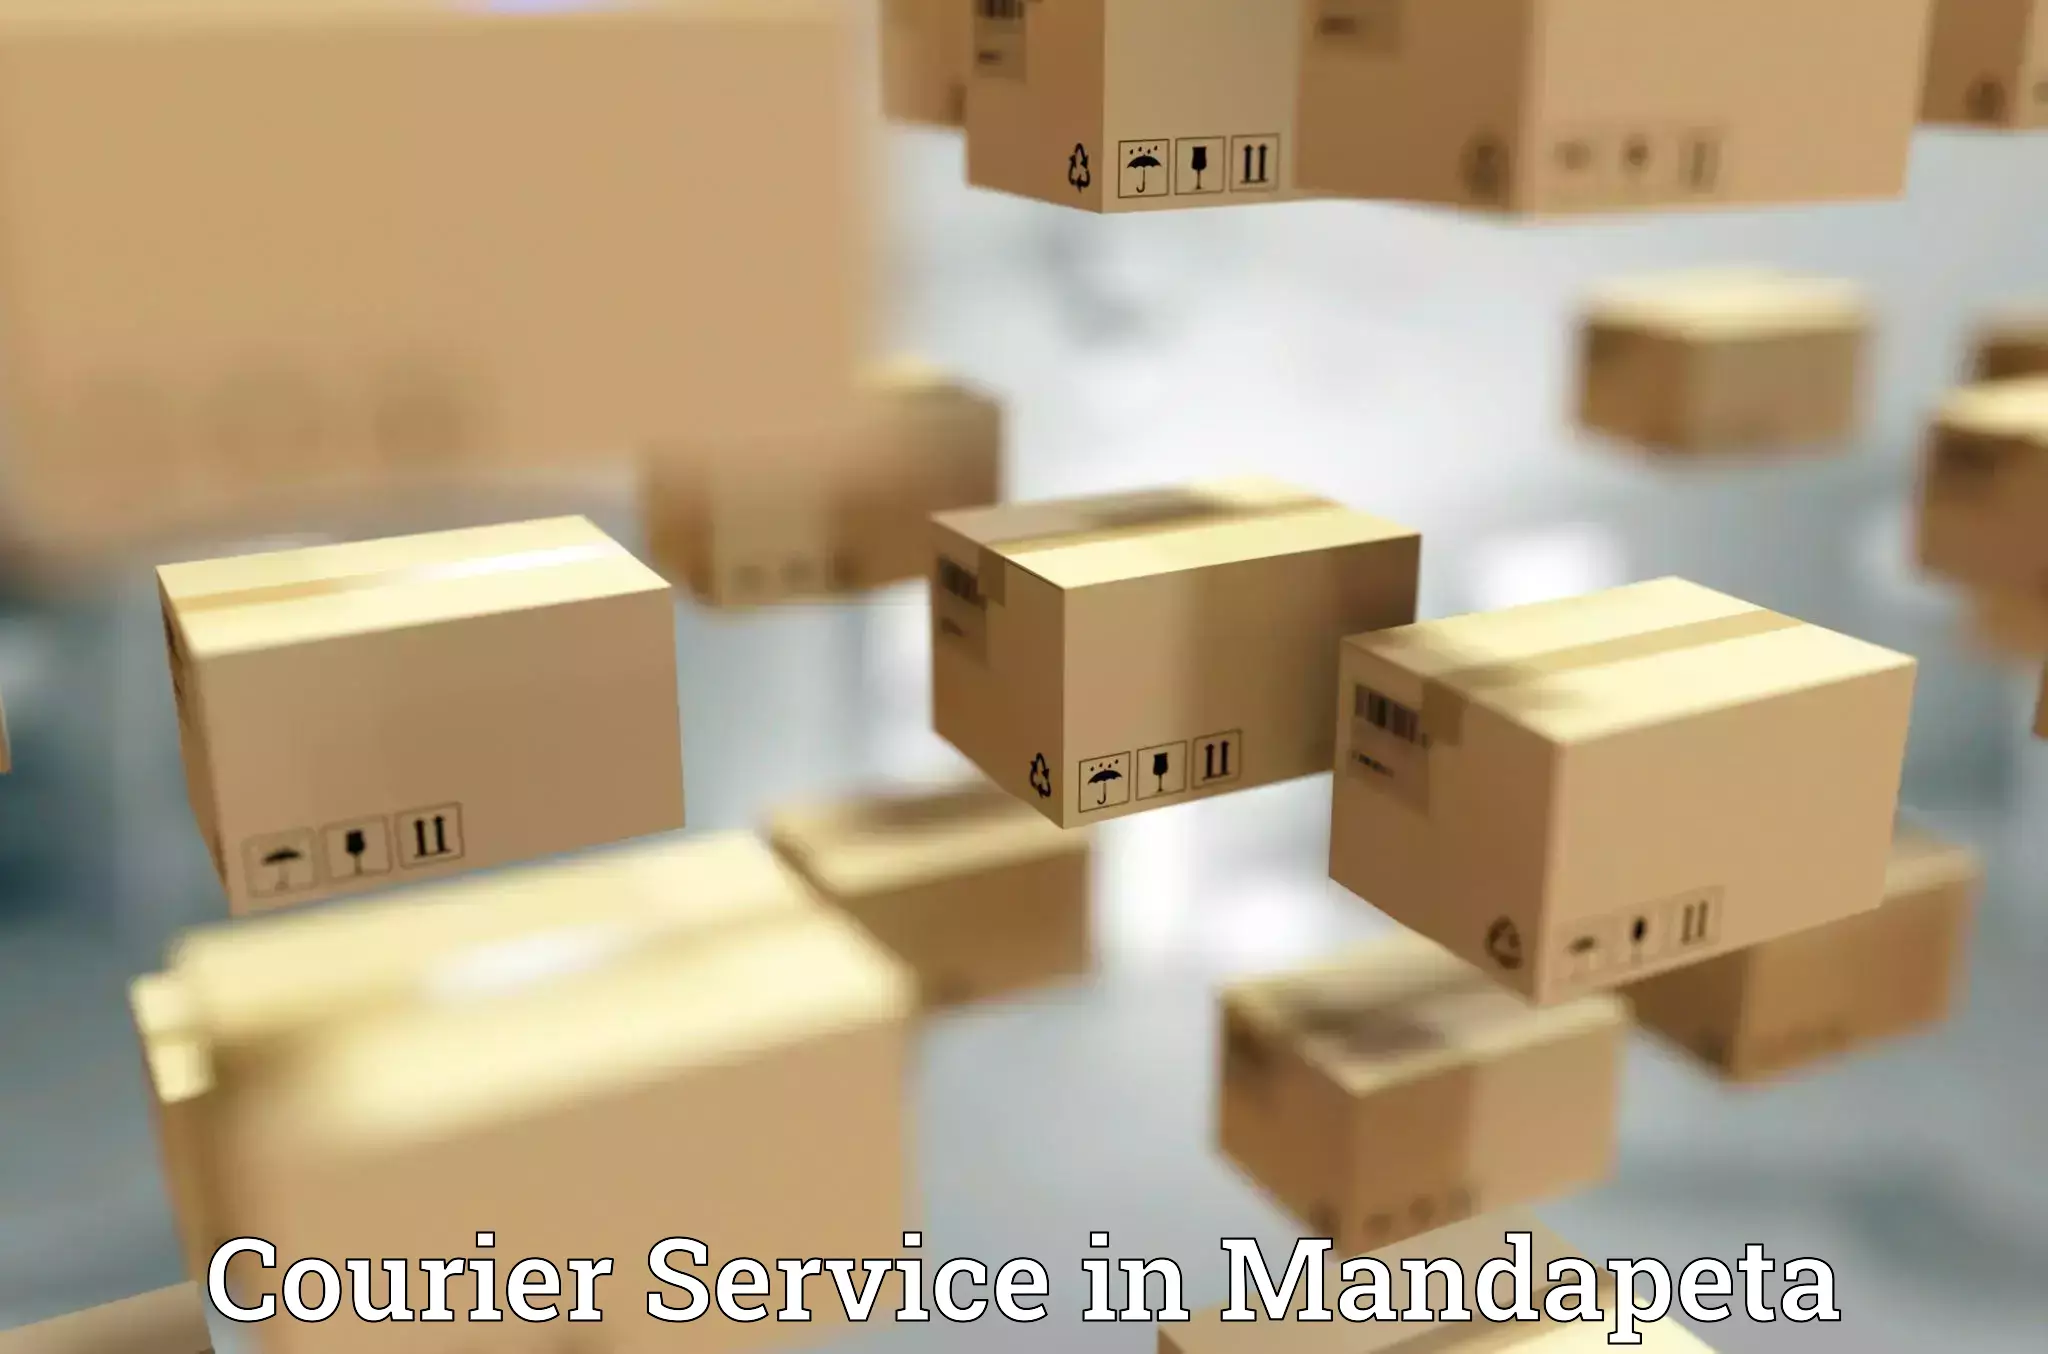 Lightweight parcel options in Mandapeta